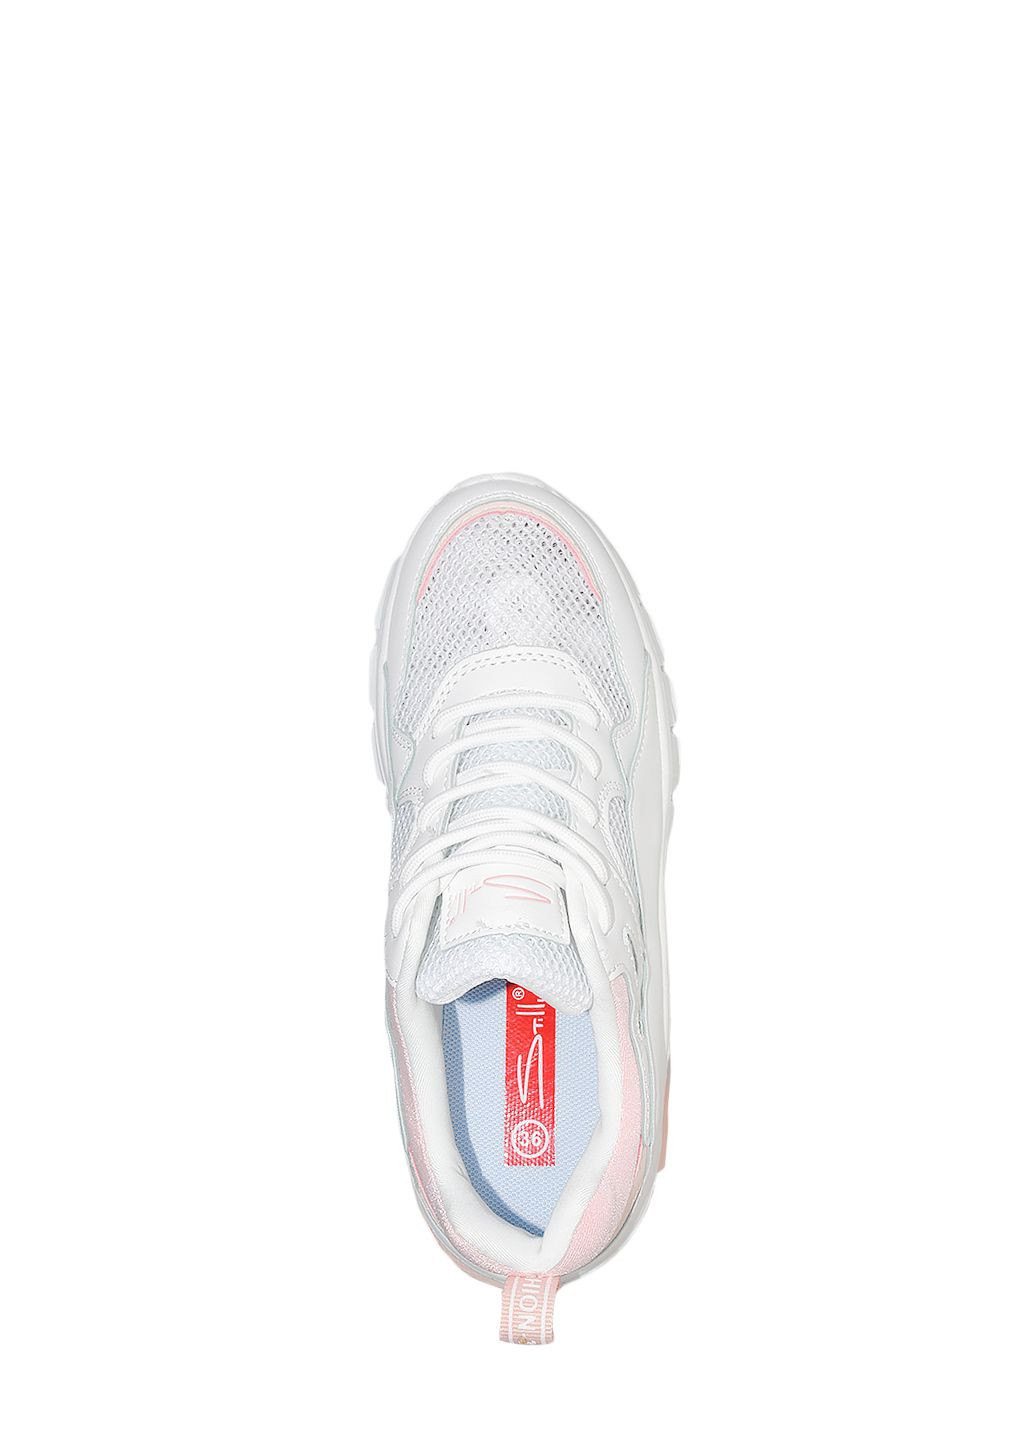 Білі осінні кросівки st3600-8 white-pink Stilli